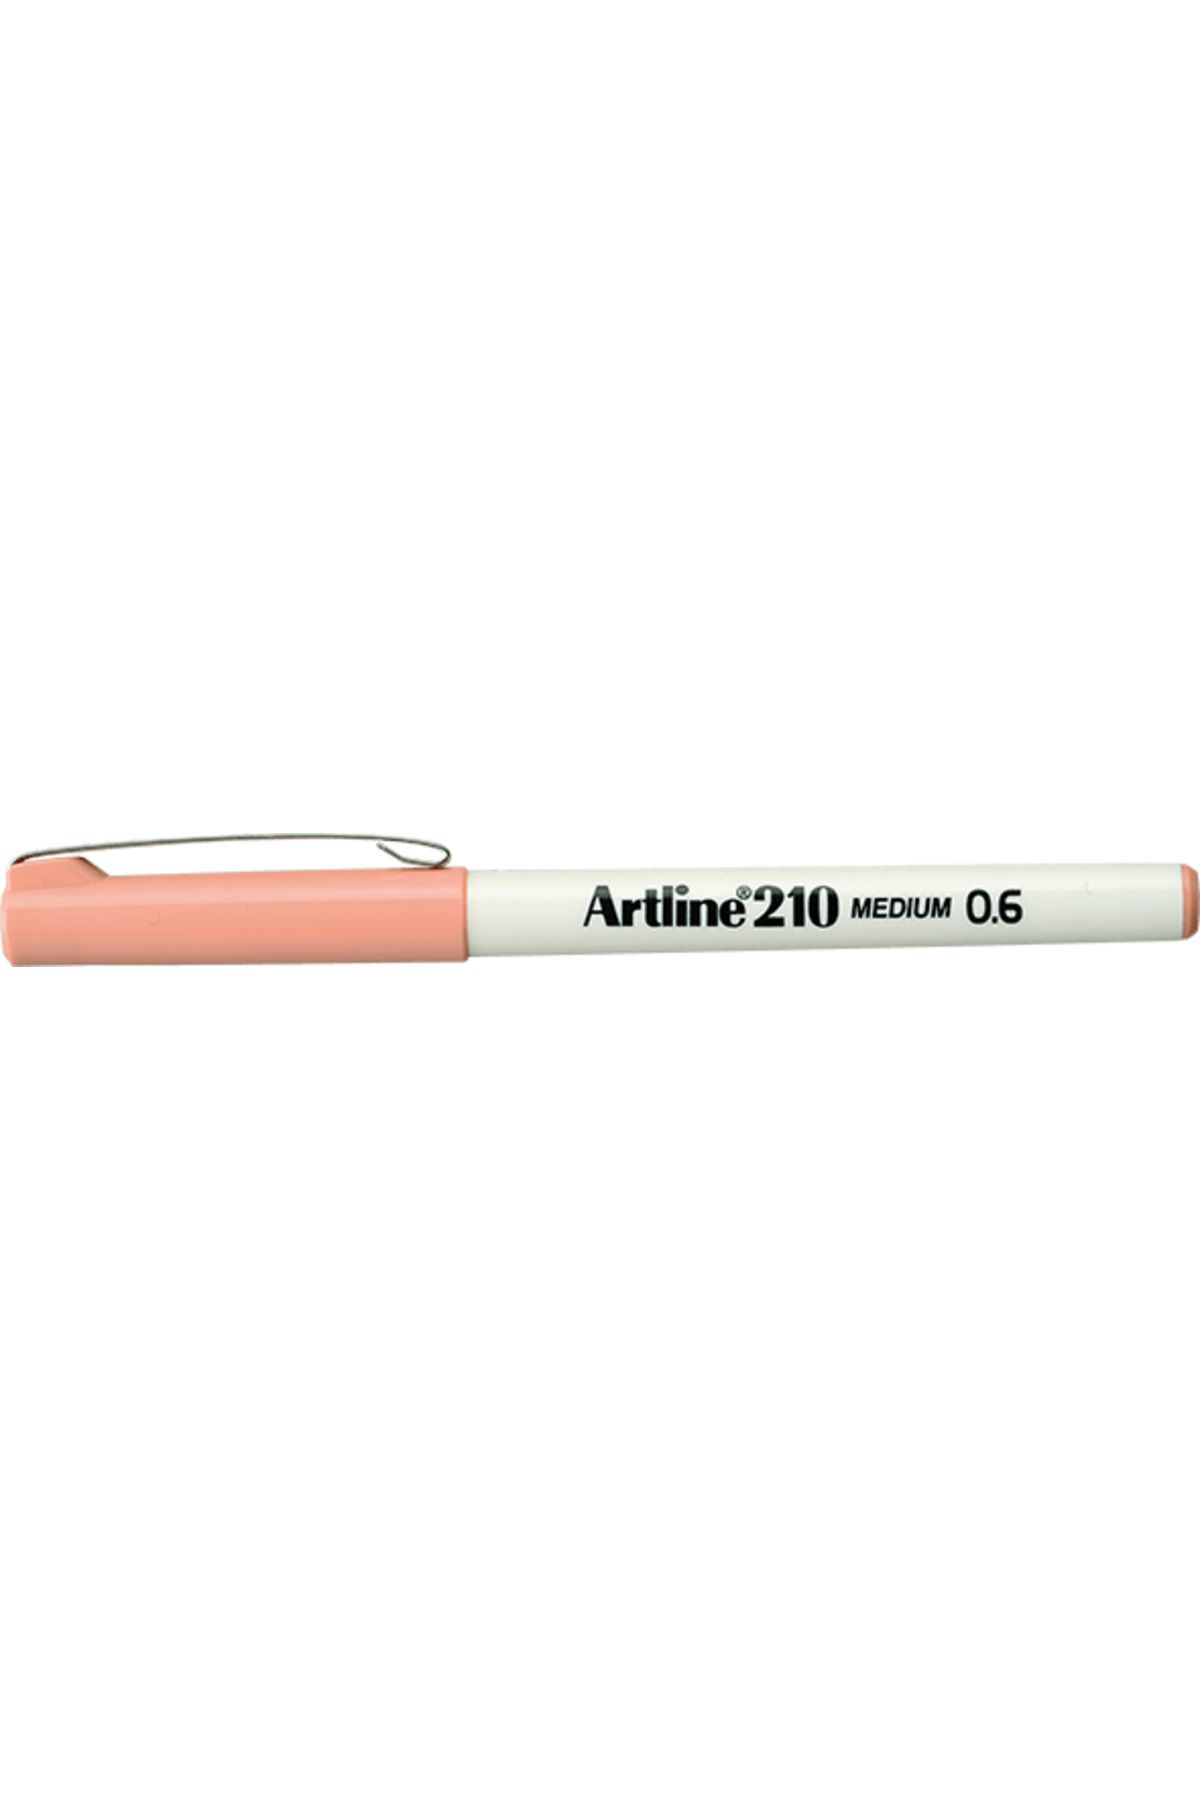 artline 210 Keçe Uçlu Kalem 0.6mm Medium Liner Kayısı (APRİCOT)